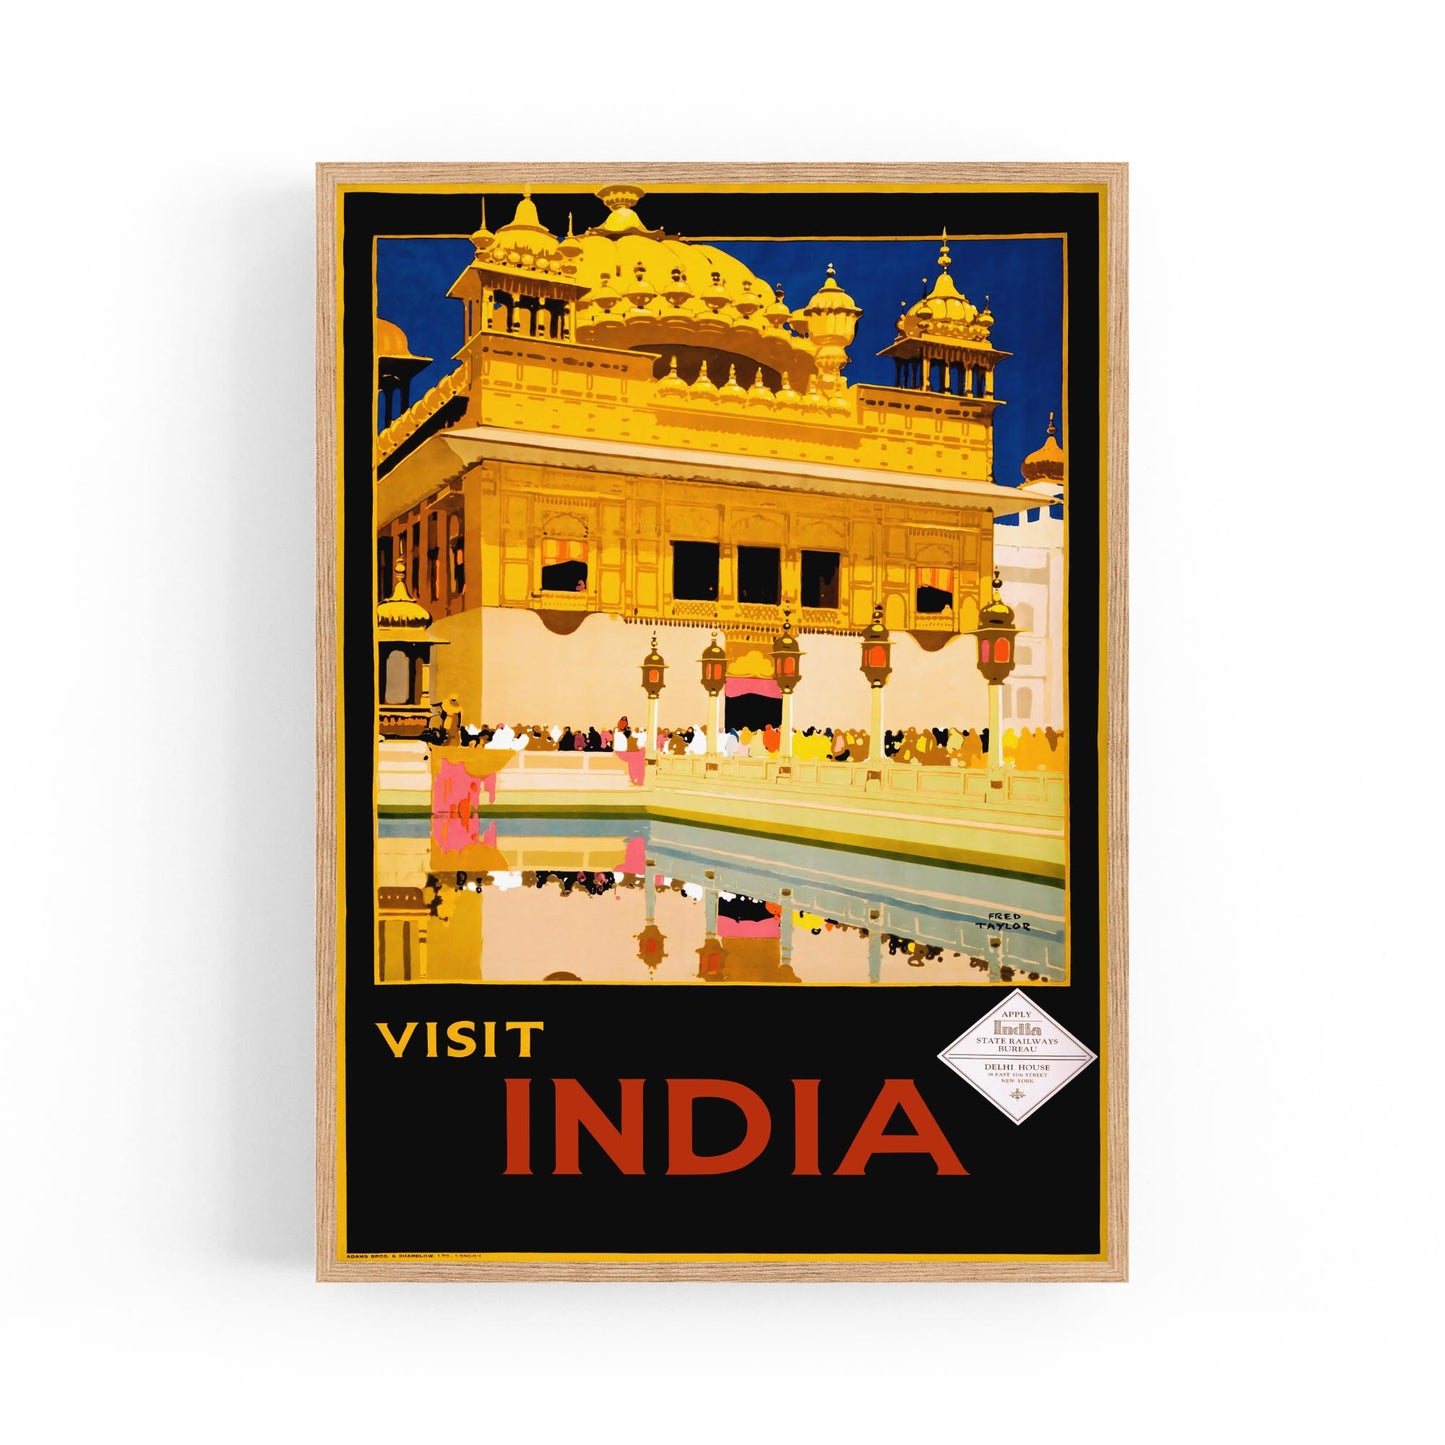 Visit India, Golden Temple in Amritsar - India State Railway Bureau | Framed Vintage Travel Poster